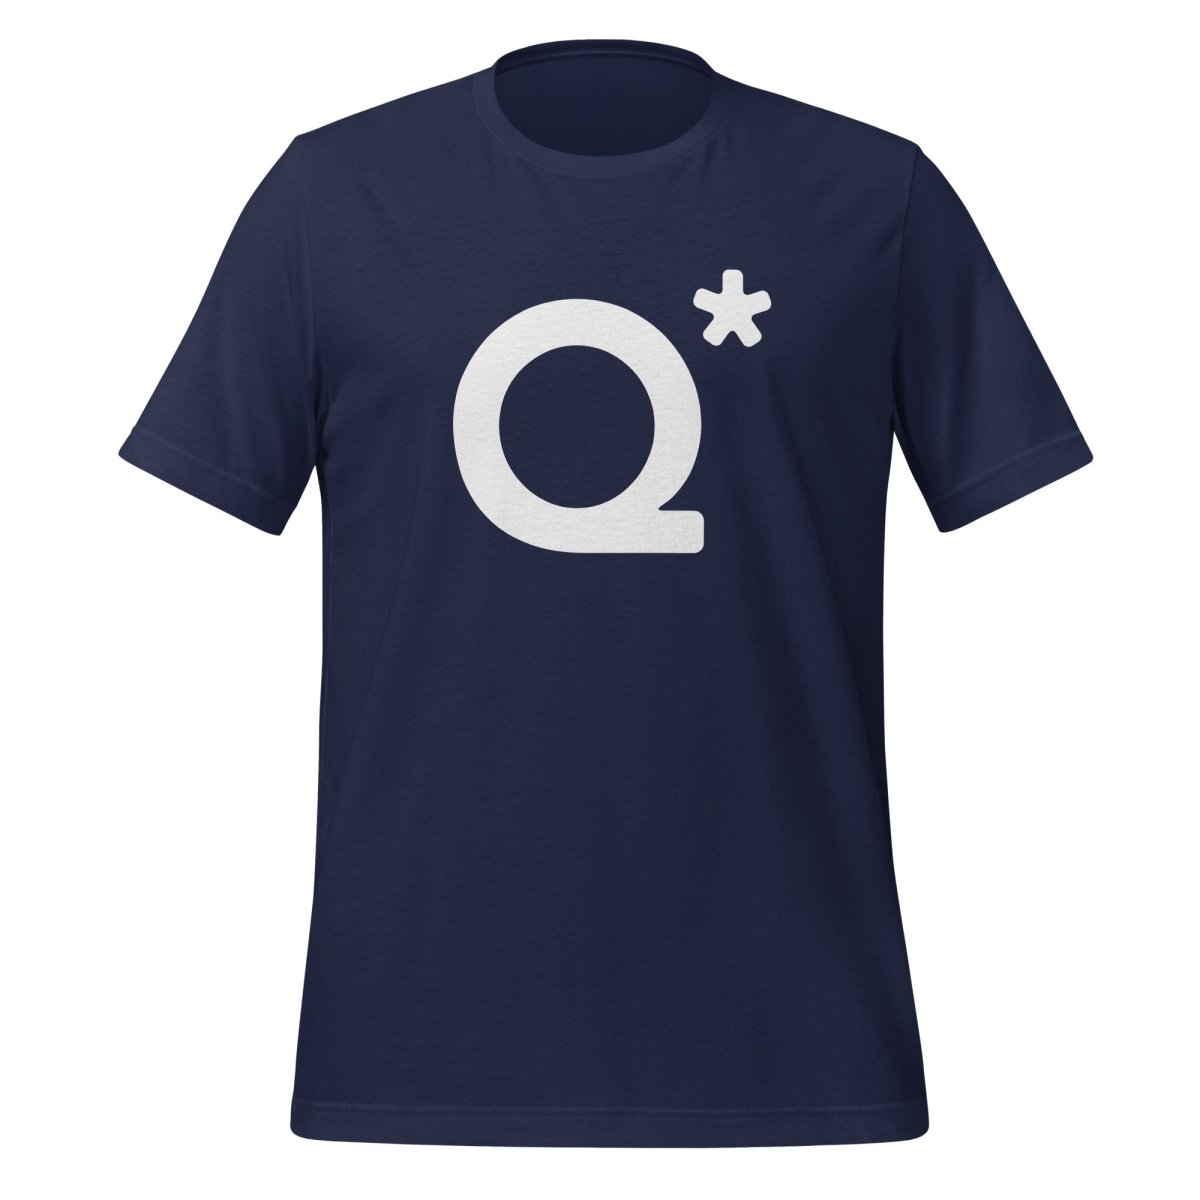 Q* (Q-Star) T-Shirt 1 (unisex) - AI Store